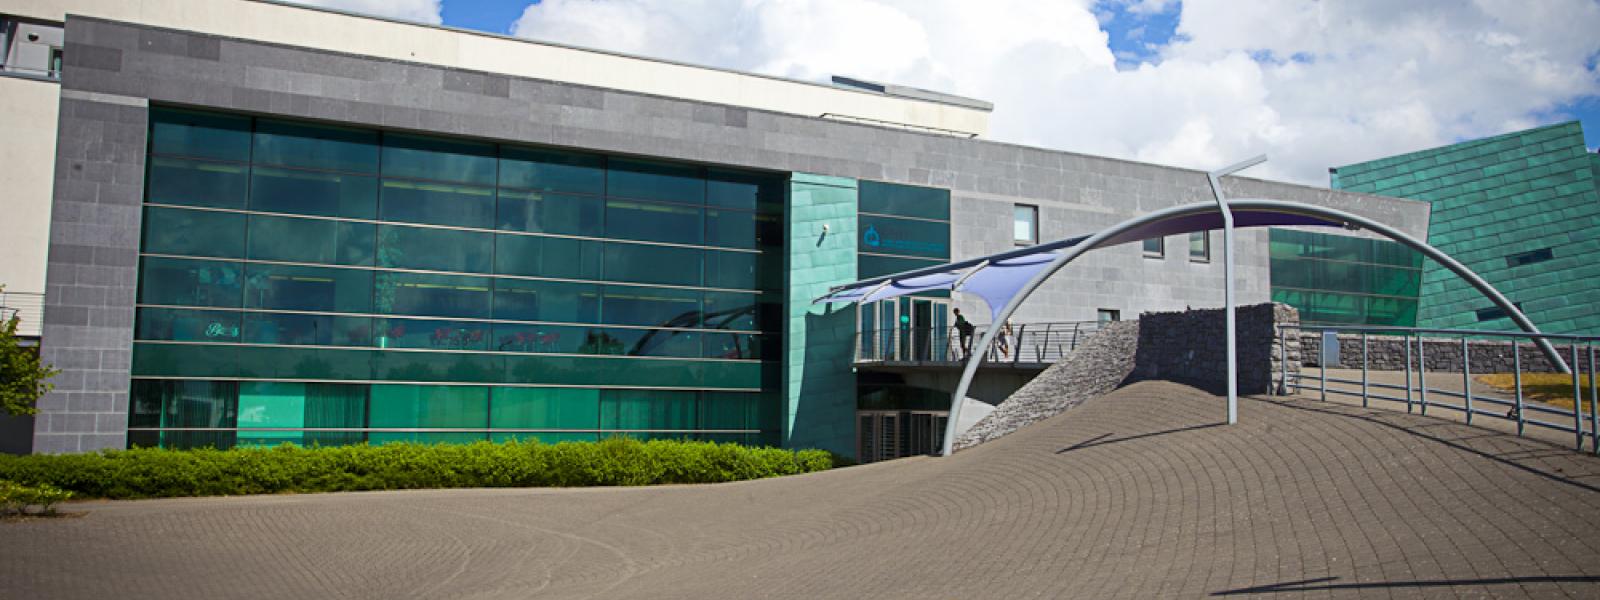 Pedestrian entrance at GMIT Galway campus